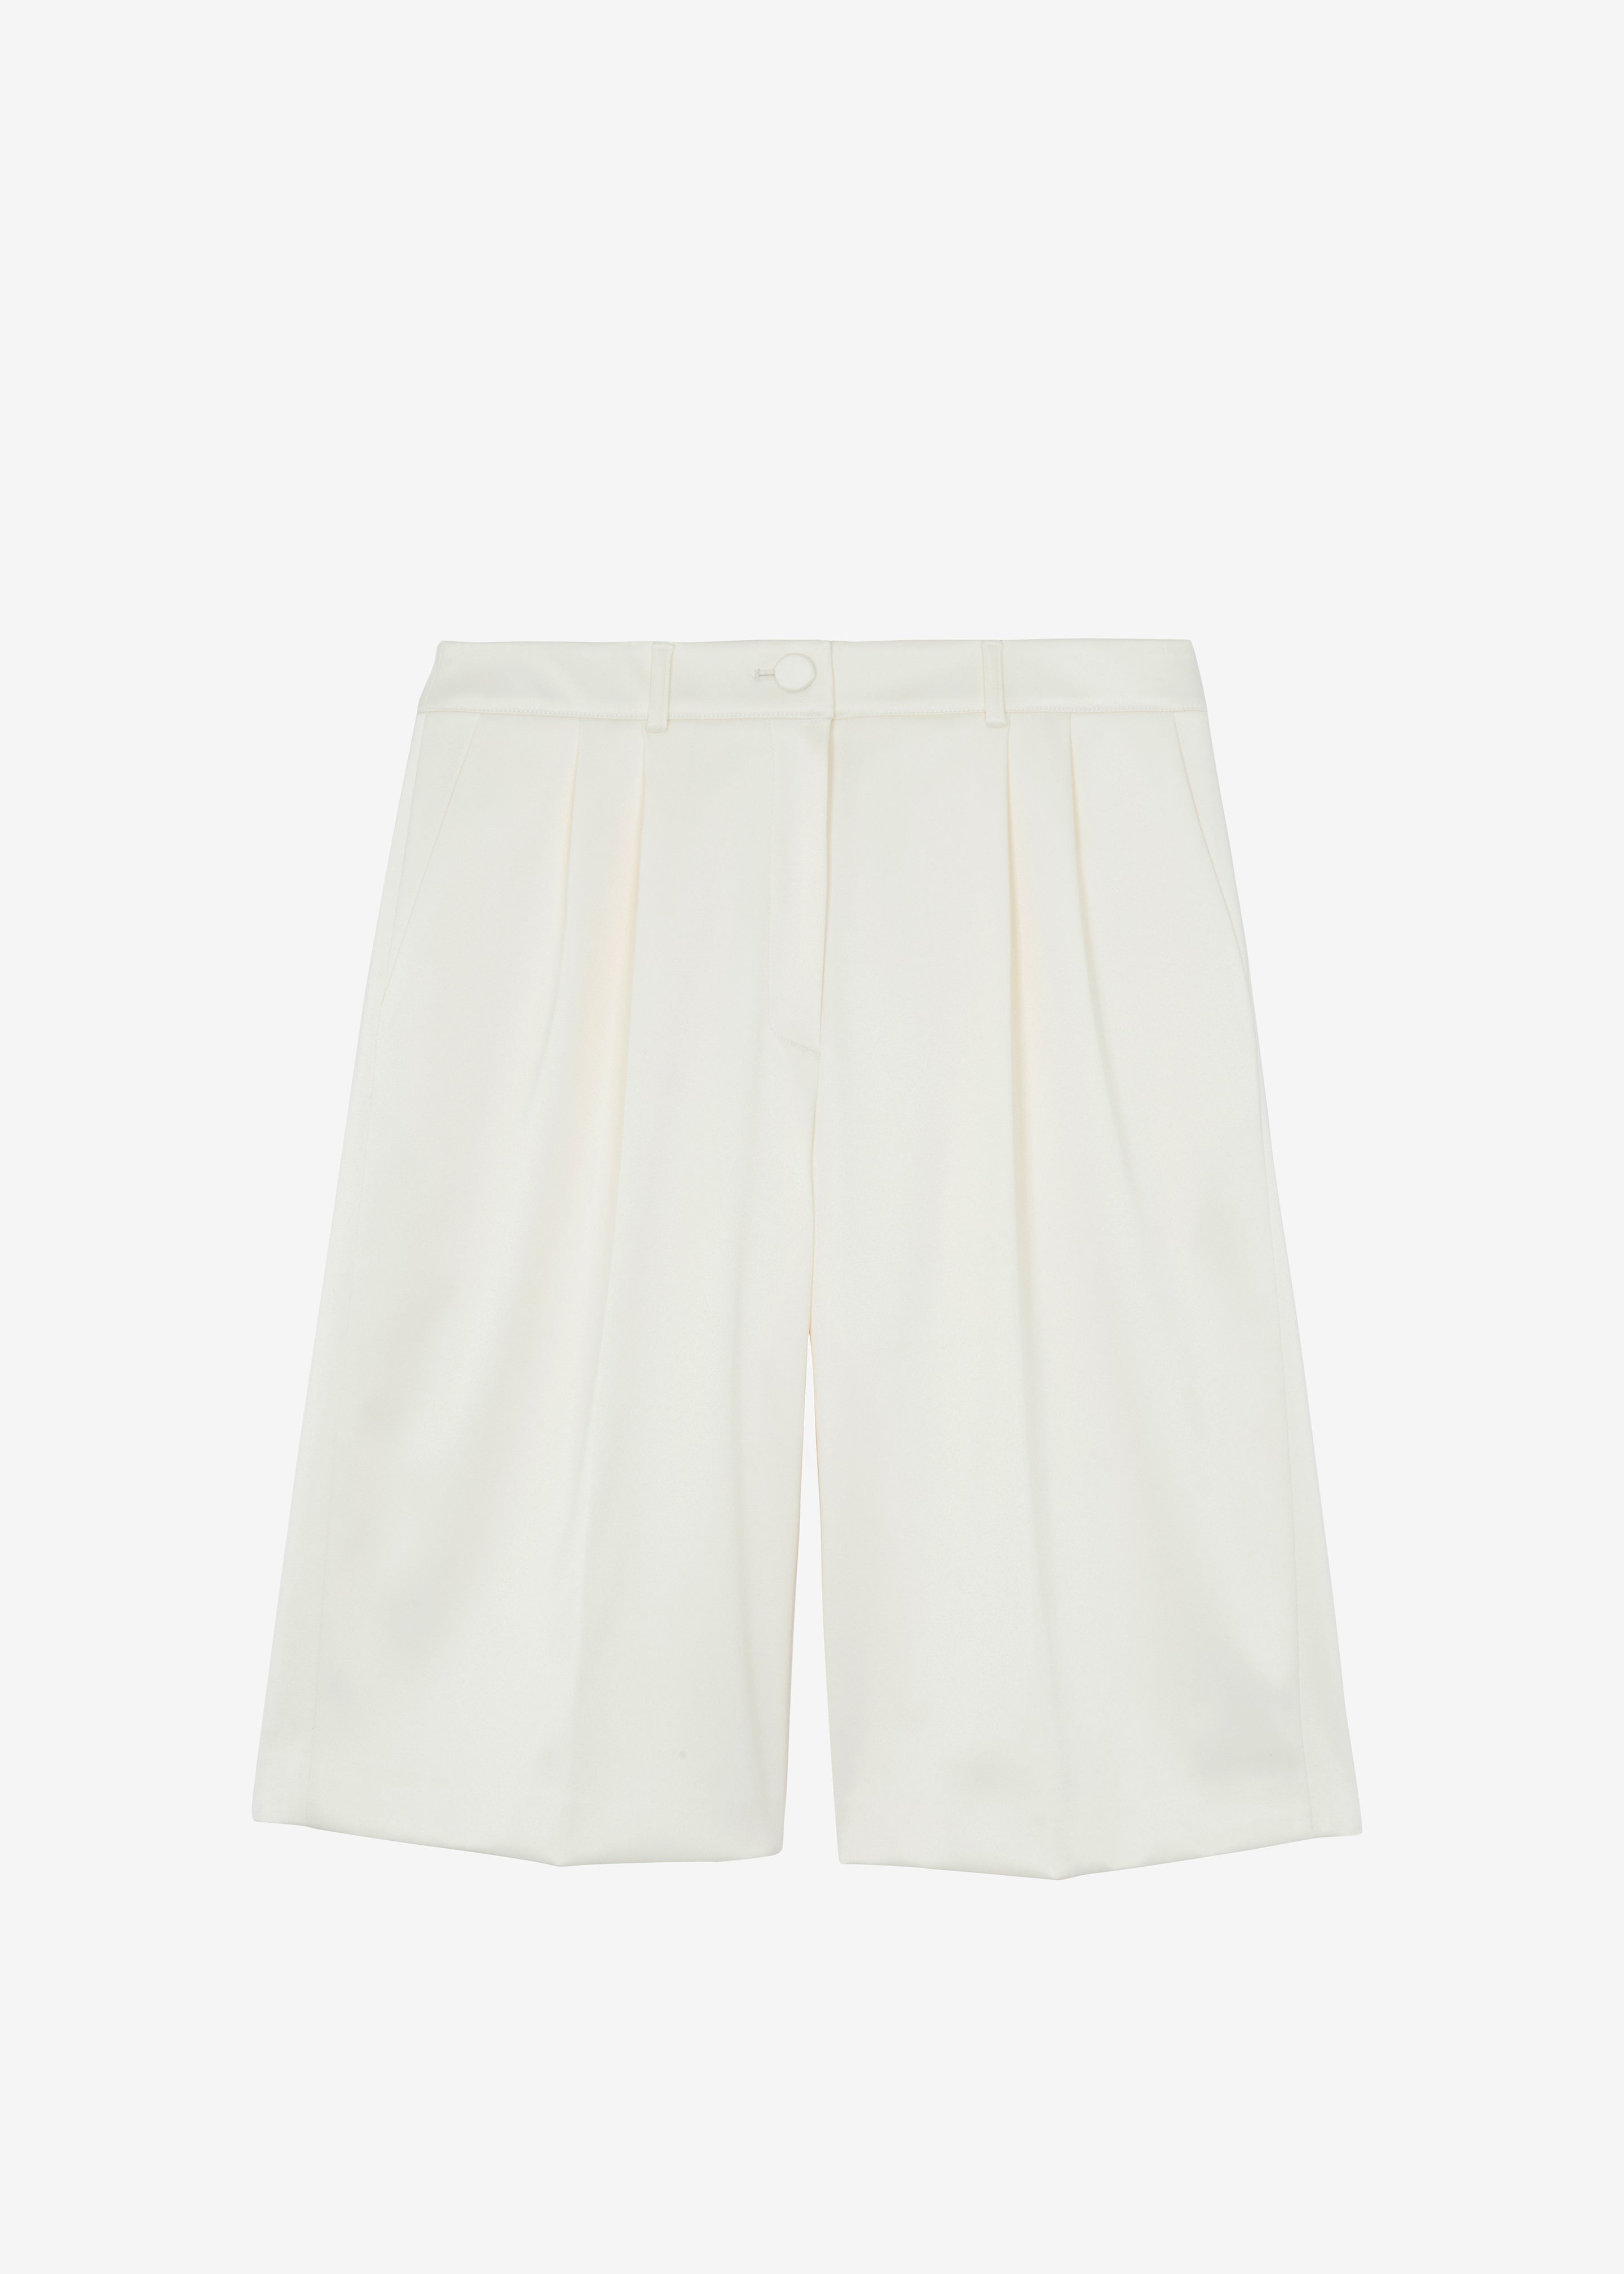 Vienna Satin Bermuda Shorts - Cream - 11